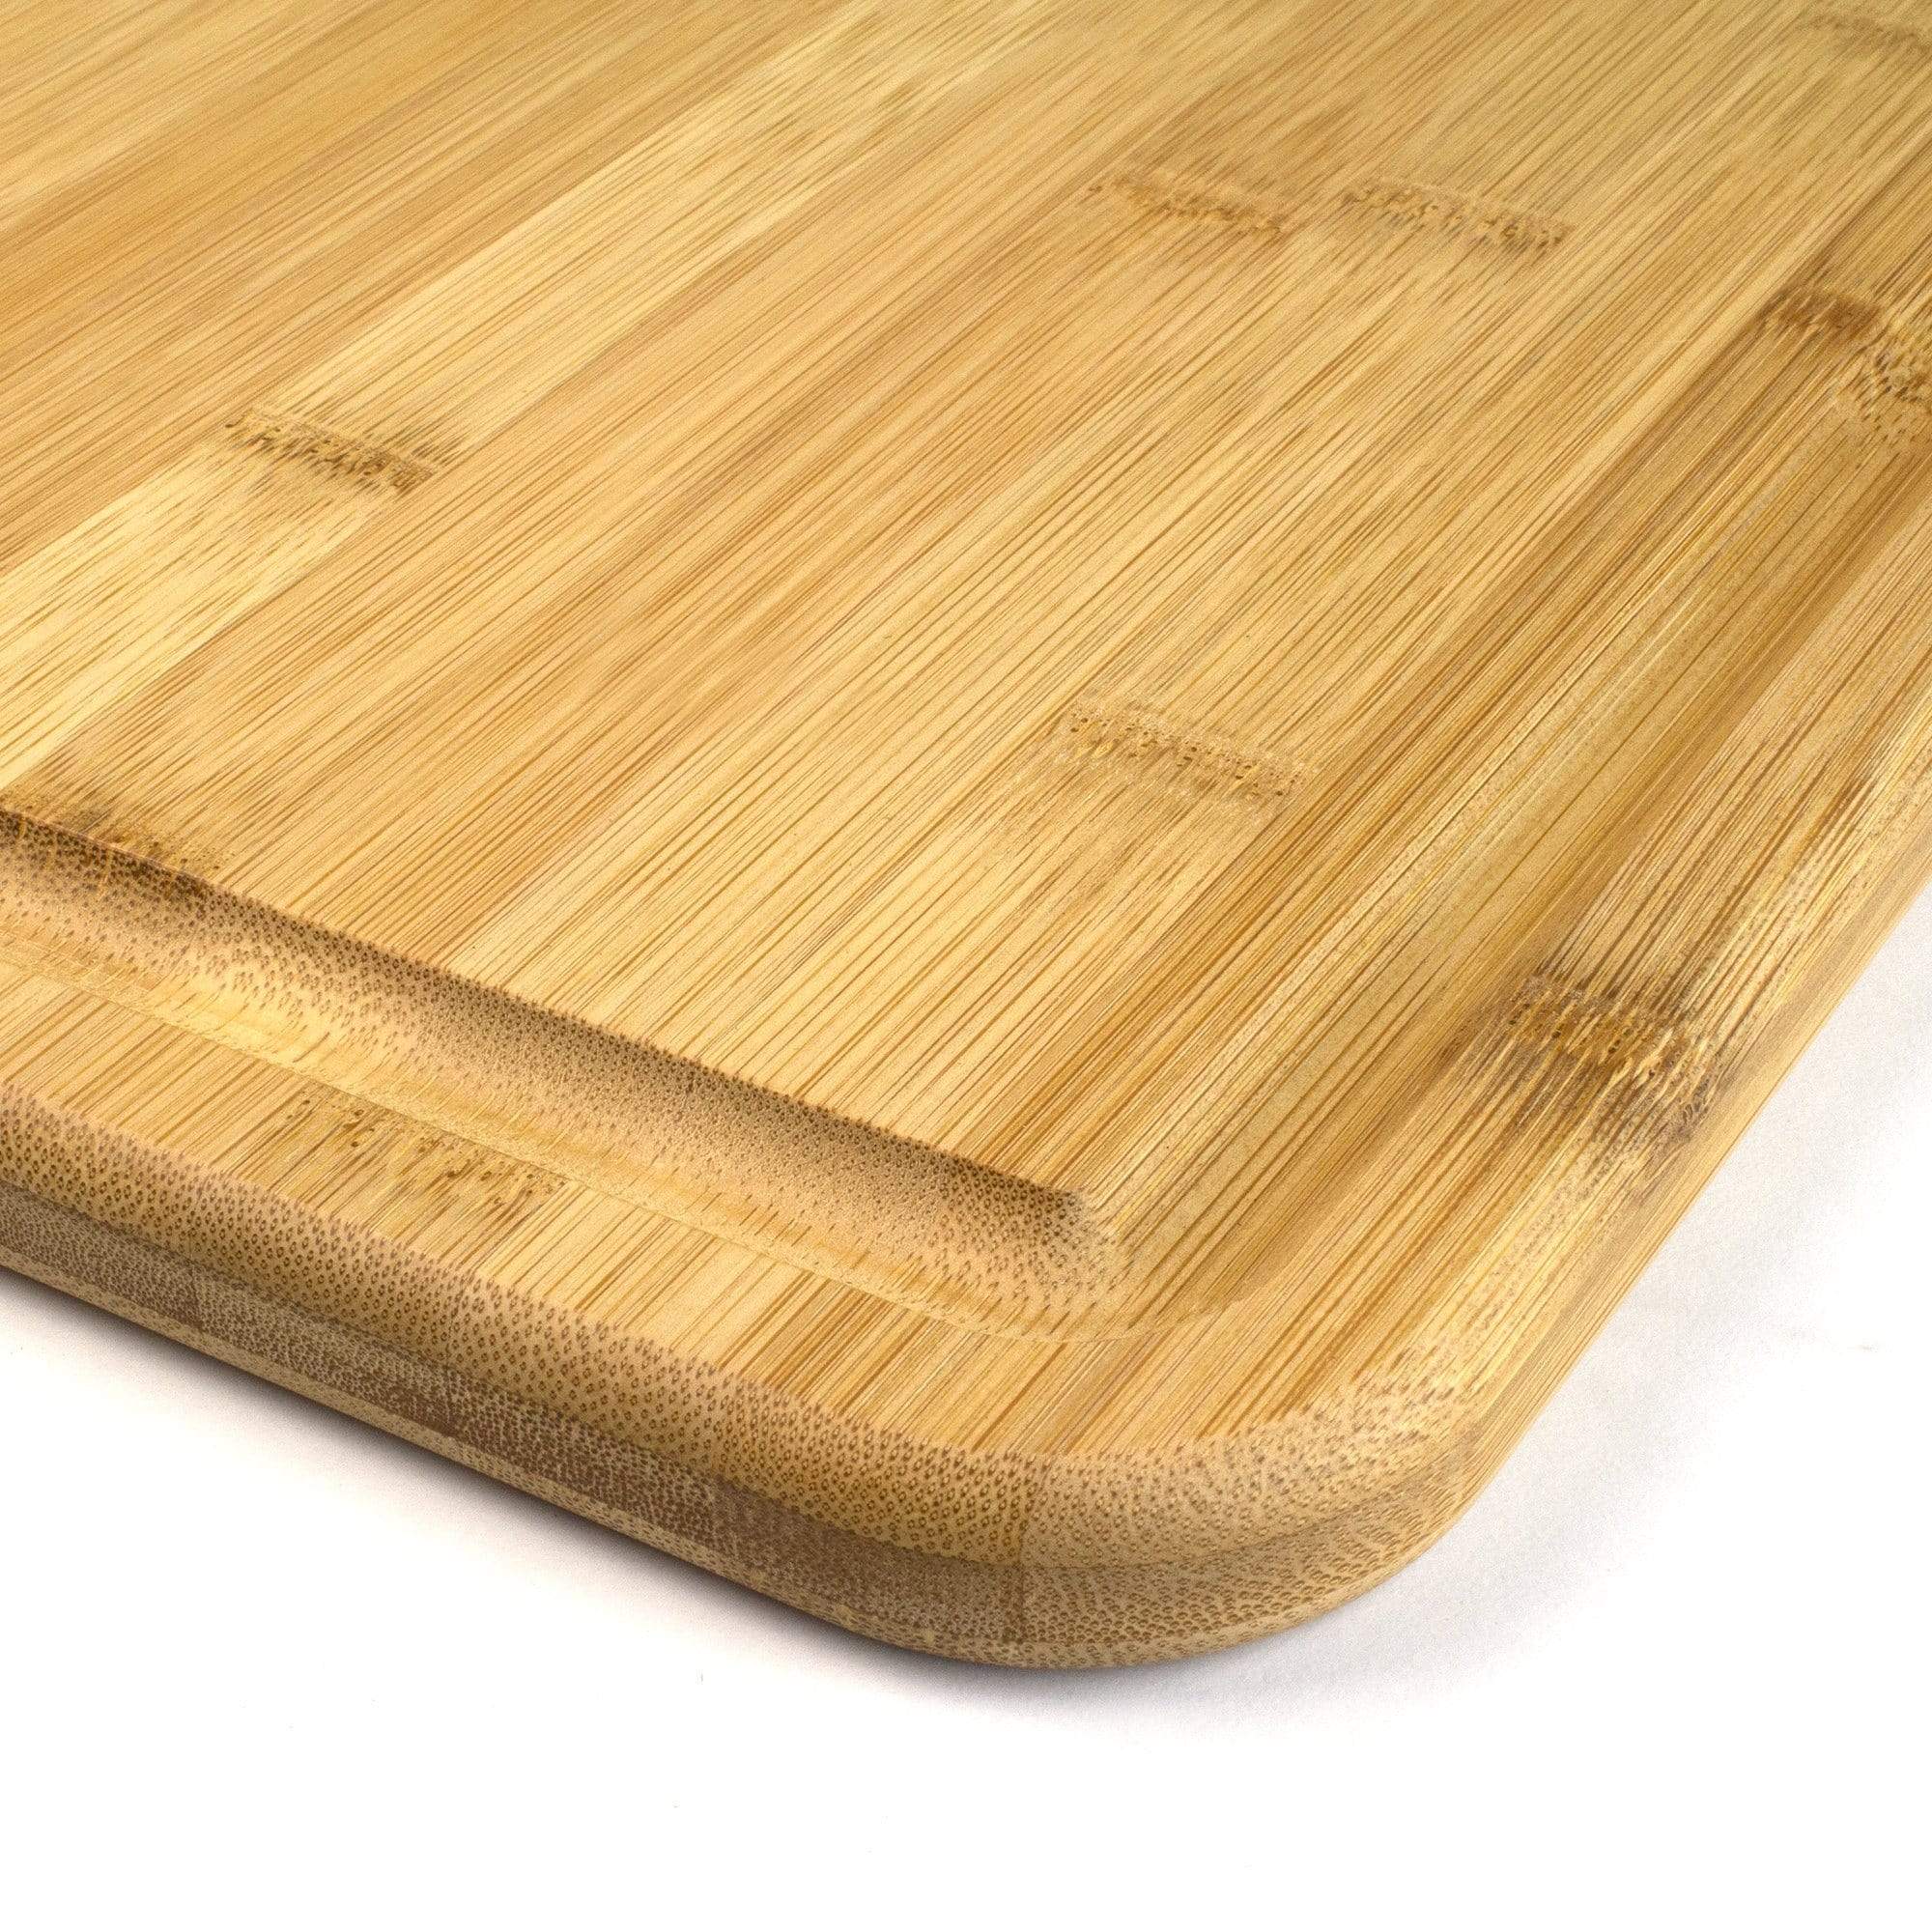 Totally Bamboo 3-Piece Cutting Board Set